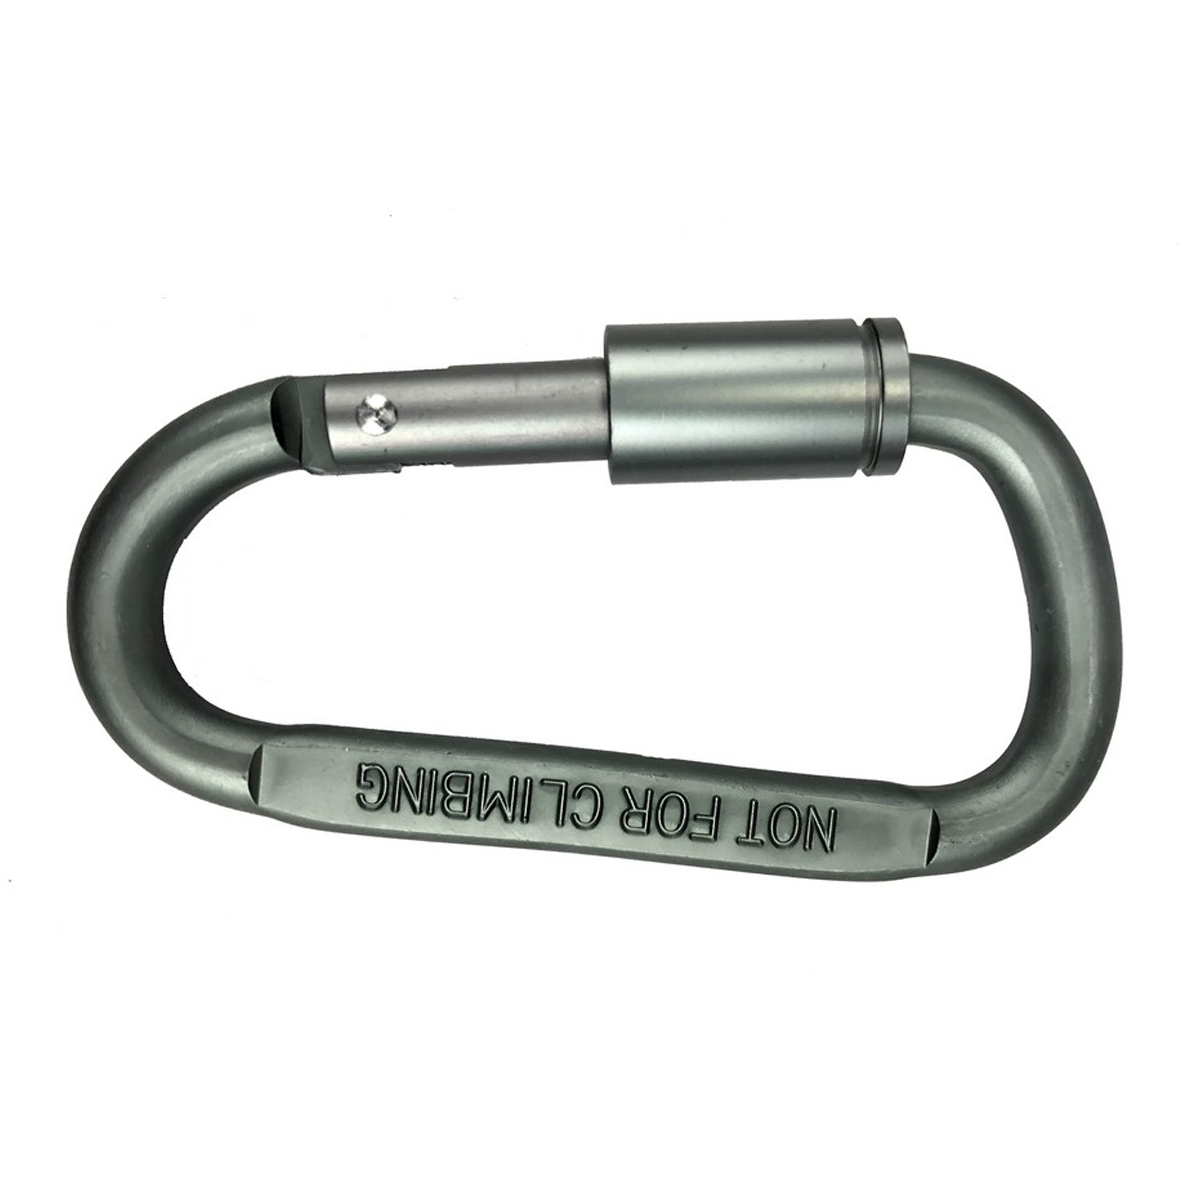 5x Camping Aluminum D-Ring Screw Locking Carabiner Hook Clip Key Chain Jl